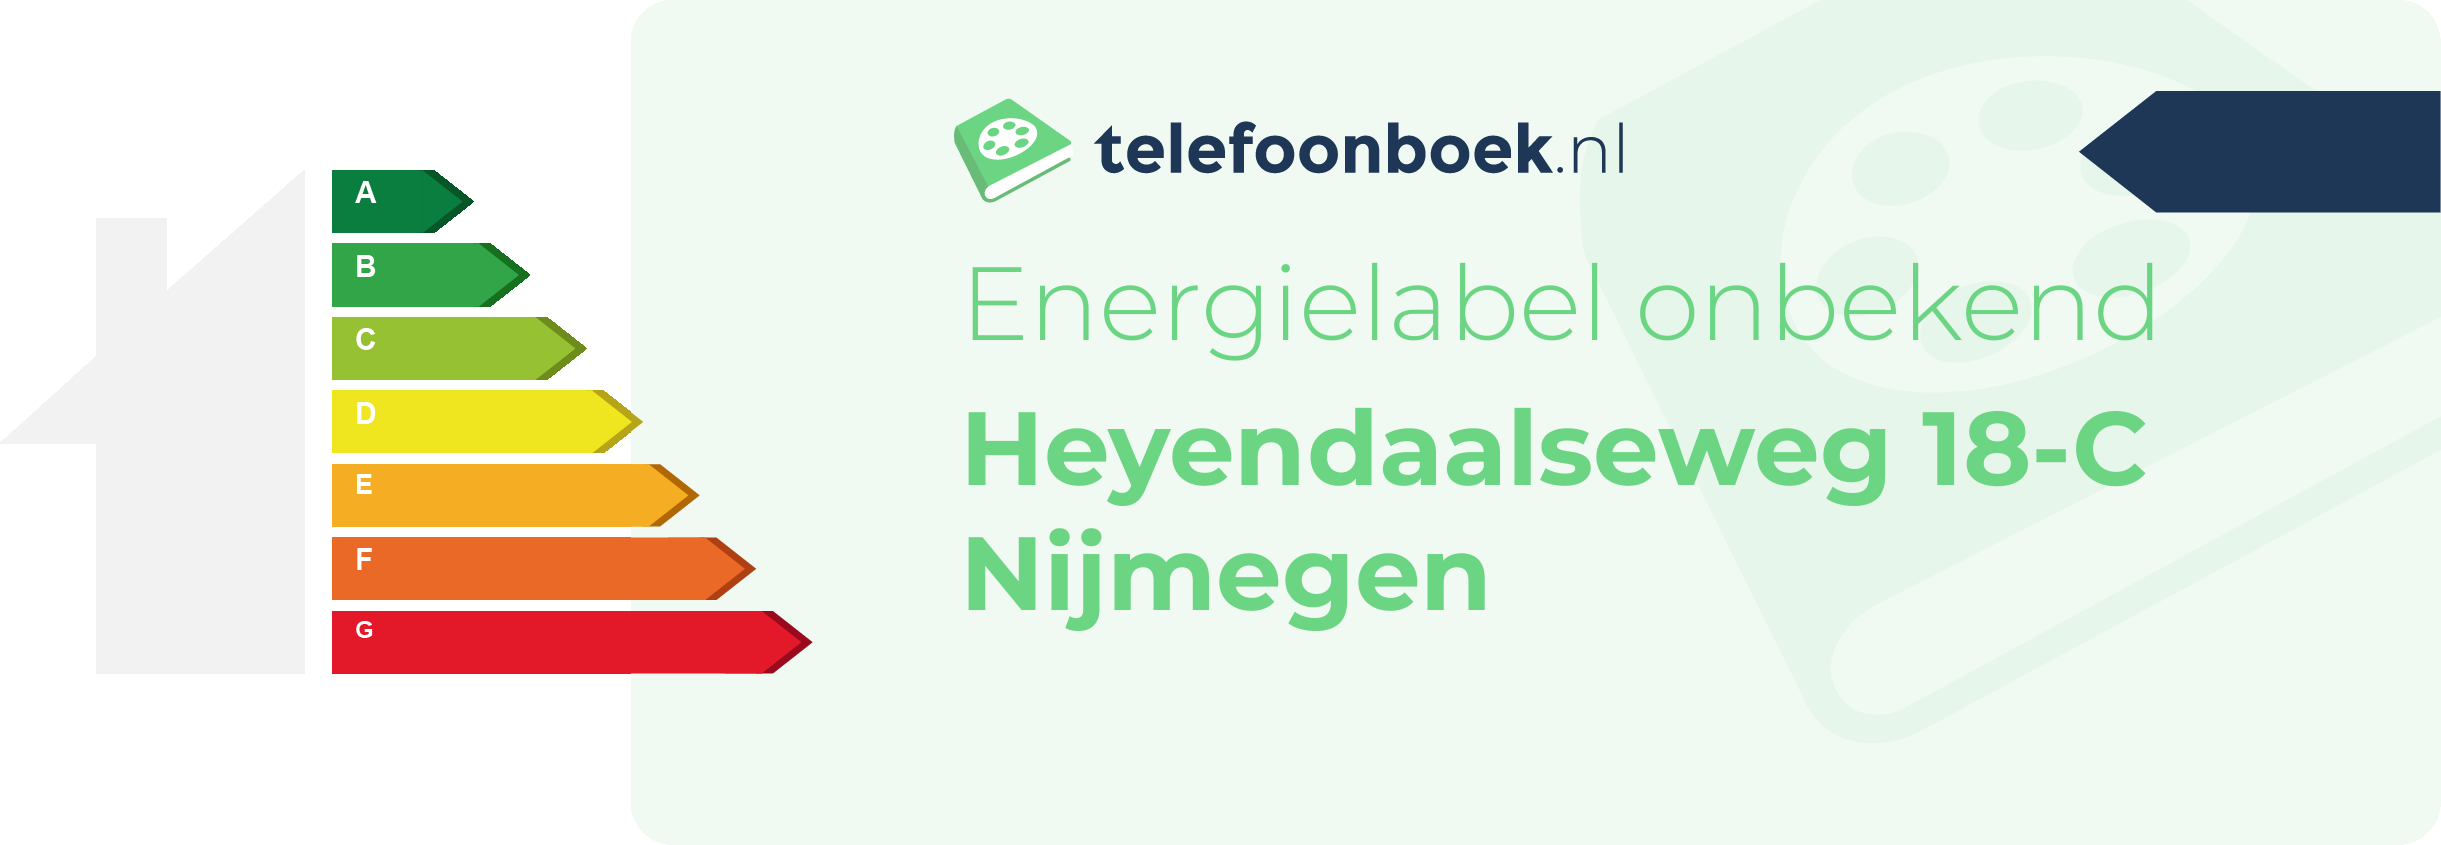 Energielabel Heyendaalseweg 18-C Nijmegen